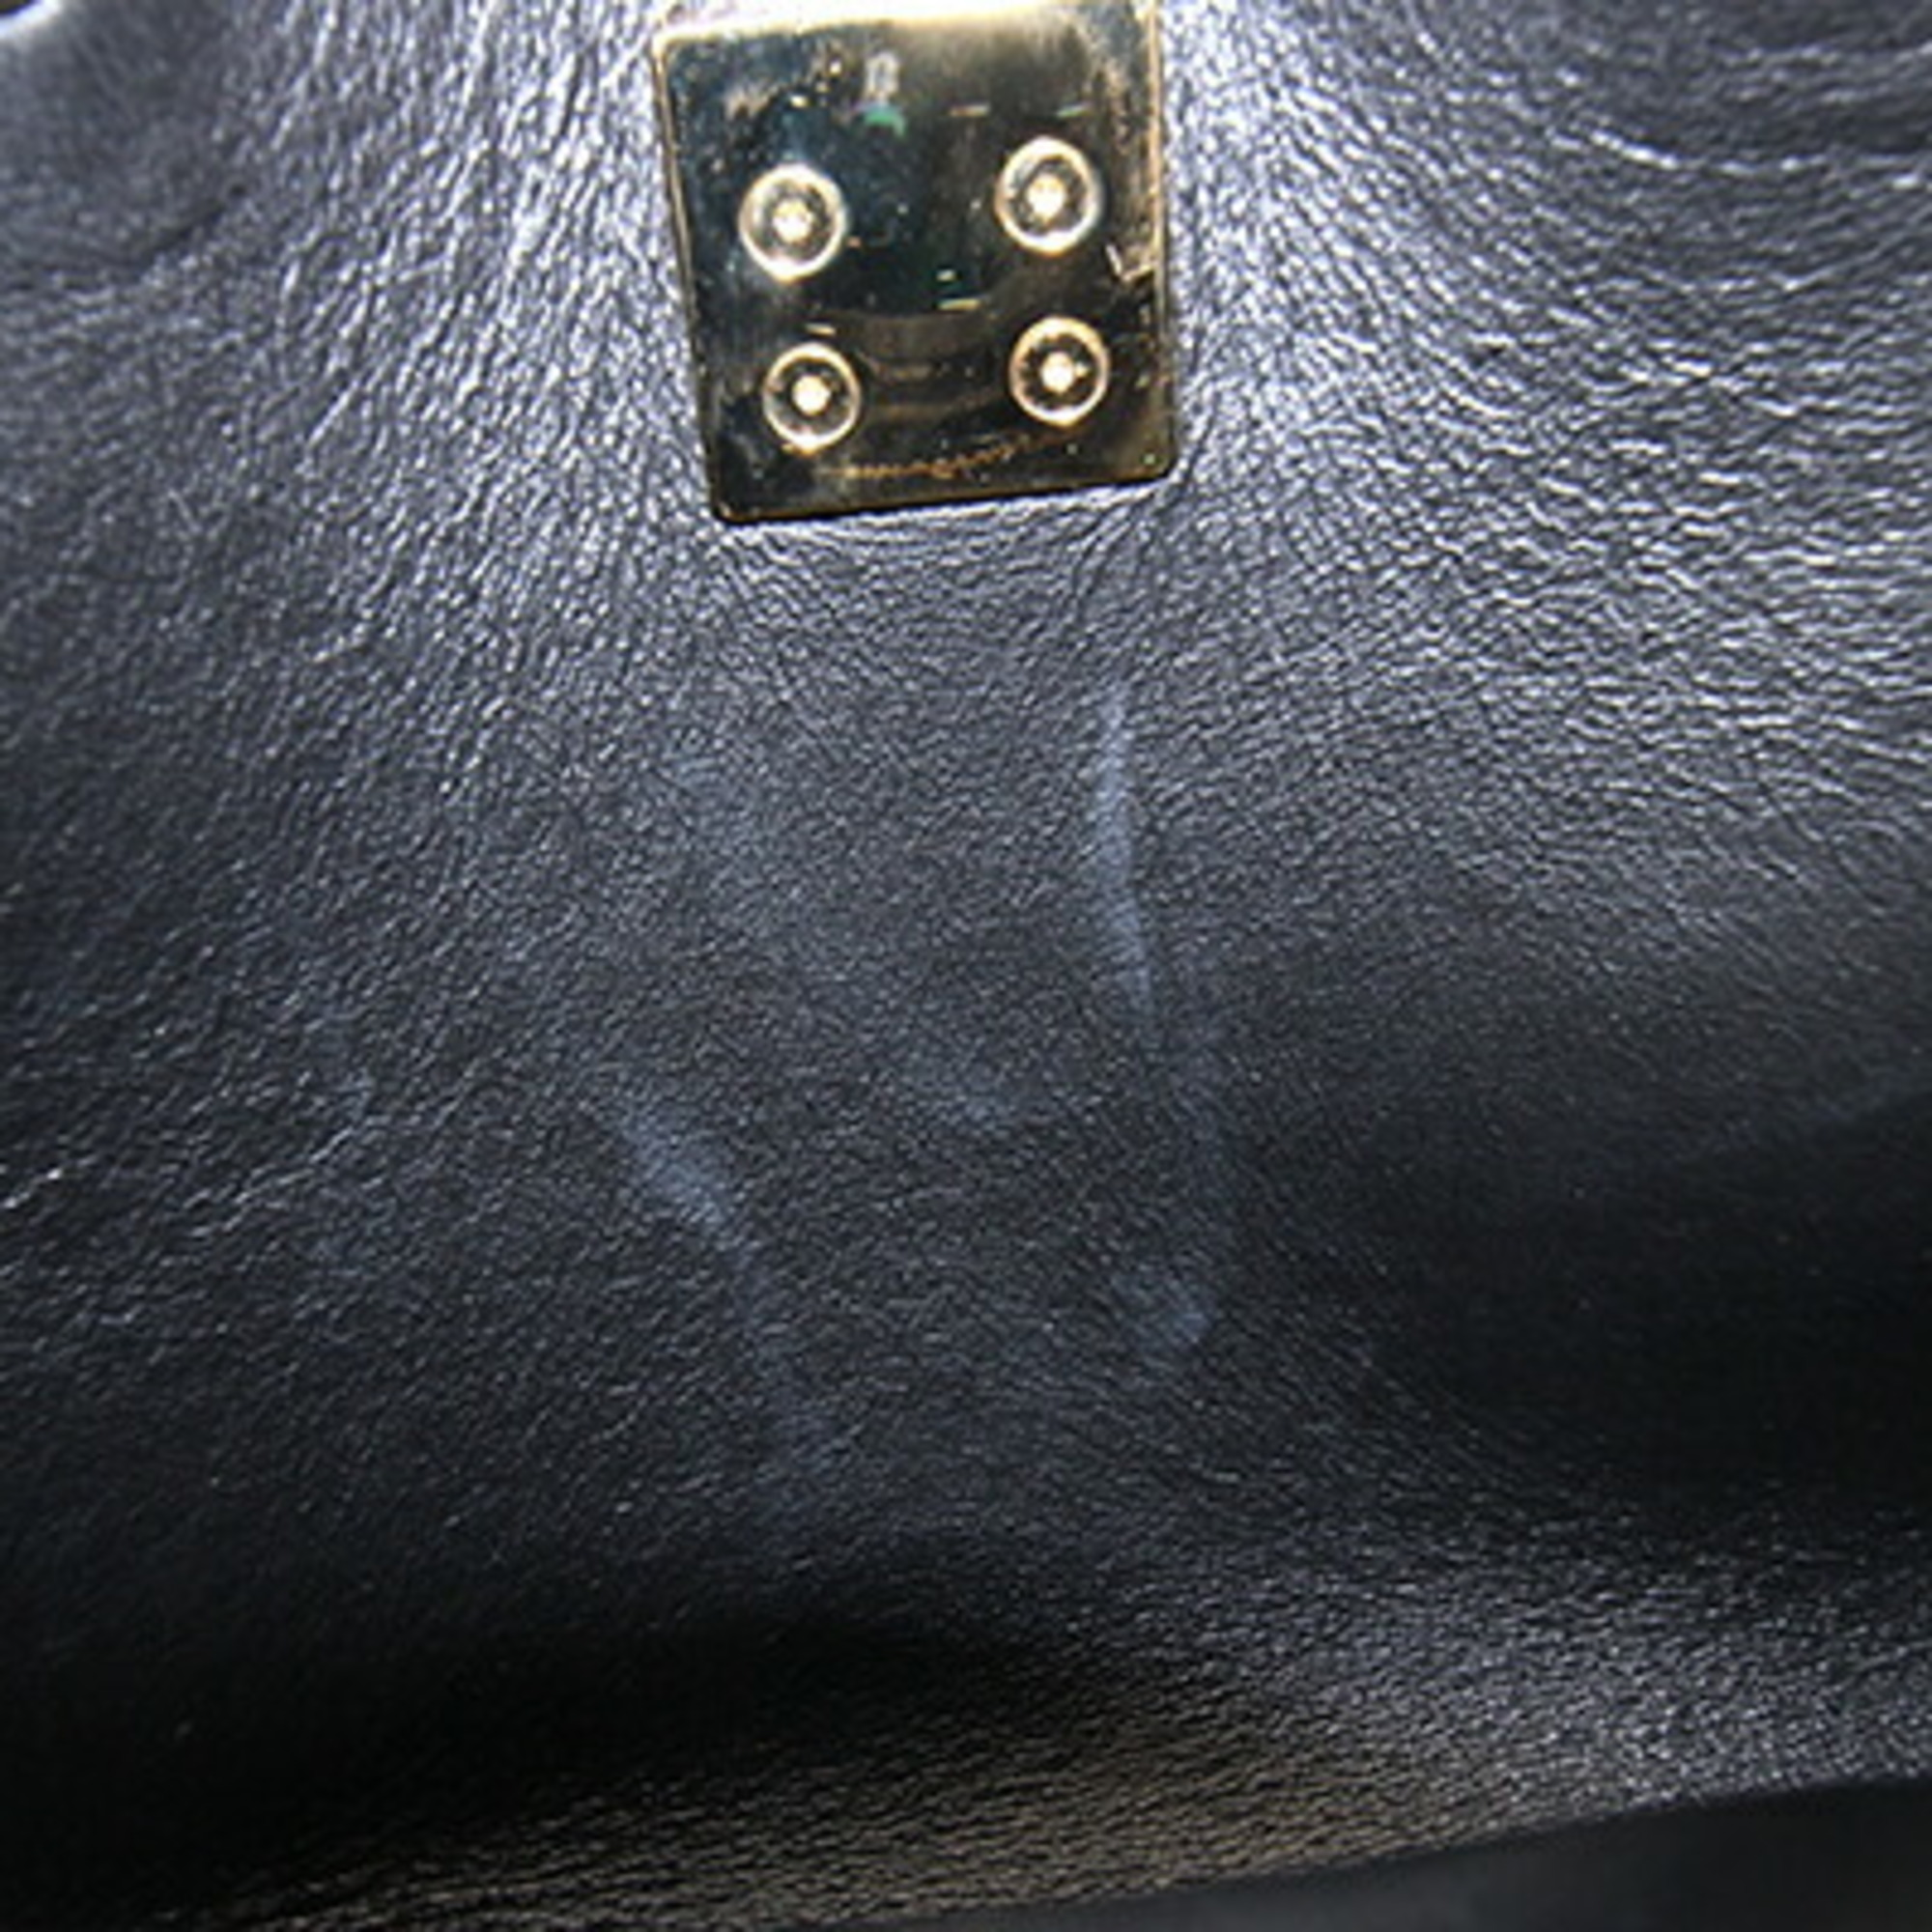 Salvatore Ferragamo Handbag Gancini Juliet AU-21 D658 Black Leather with Key Women's